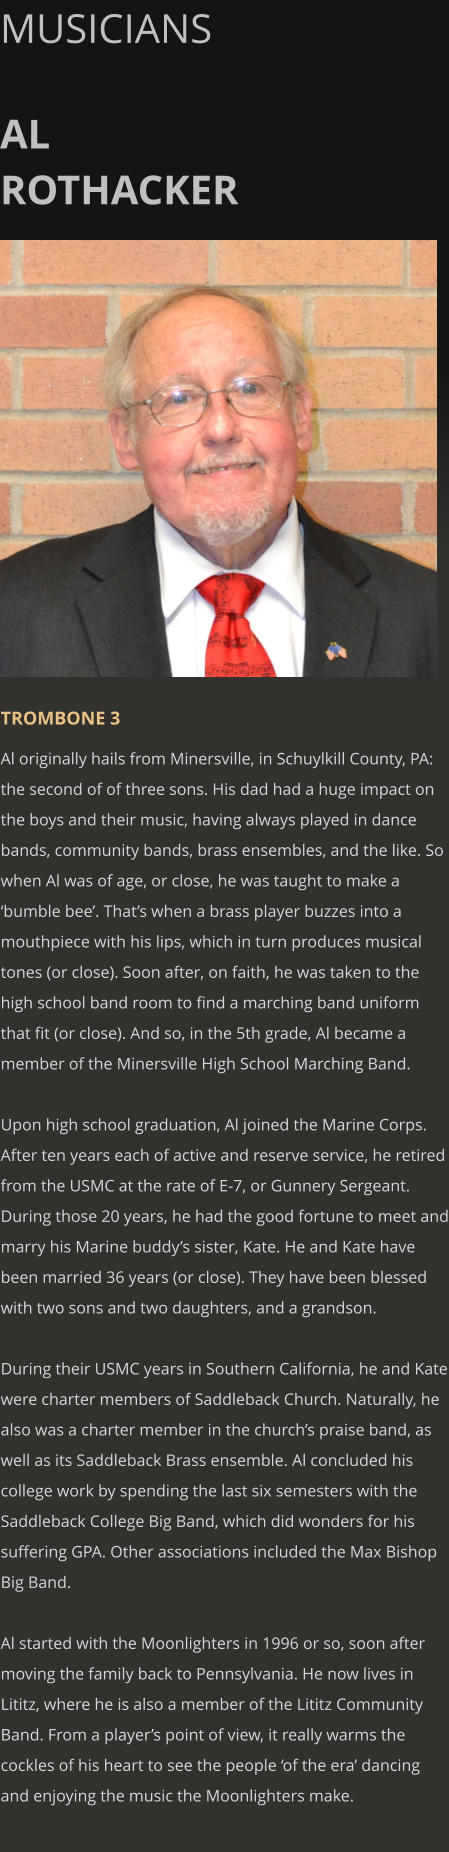 MUSICIANS  AL ROTHACKER      TROMBONE 3 Al originally hails from Minersville, in Schuylkill County, PA: the second of of three sons. His dad had a huge impact on the boys and their music, having always played in dance bands, community bands, brass ensembles, and the like. So when Al was of age, or close, he was taught to make a ‘bumble bee’. That’s when a brass player buzzes into a mouthpiece with his lips, which in turn produces musical tones (or close). Soon after, on faith, he was taken to the high school band room to find a marching band uniform that fit (or close). And so, in the 5th grade, Al became a member of the Minersville High School Marching Band.  Upon high school graduation, Al joined the Marine Corps. After ten years each of active and reserve service, he retired from the USMC at the rate of E-7, or Gunnery Sergeant. During those 20 years, he had the good fortune to meet and marry his Marine buddy’s sister, Kate. He and Kate have been married 36 years (or close). They have been blessed with two sons and two daughters, and a grandson.  During their USMC years in Southern California, he and Kate were charter members of Saddleback Church. Naturally, he also was a charter member in the church’s praise band, as well as its Saddleback Brass ensemble. Al concluded his college work by spending the last six semesters with the Saddleback College Big Band, which did wonders for his suffering GPA. Other associations included the Max Bishop Big Band.  Al started with the Moonlighters in 1996 or so, soon after moving the family back to Pennsylvania. He now lives in Lititz, where he is also a member of the Lititz Community Band. From a player’s point of view, it really warms the cockles of his heart to see the people ‘of the era’ dancing and enjoying the music the Moonlighters make.